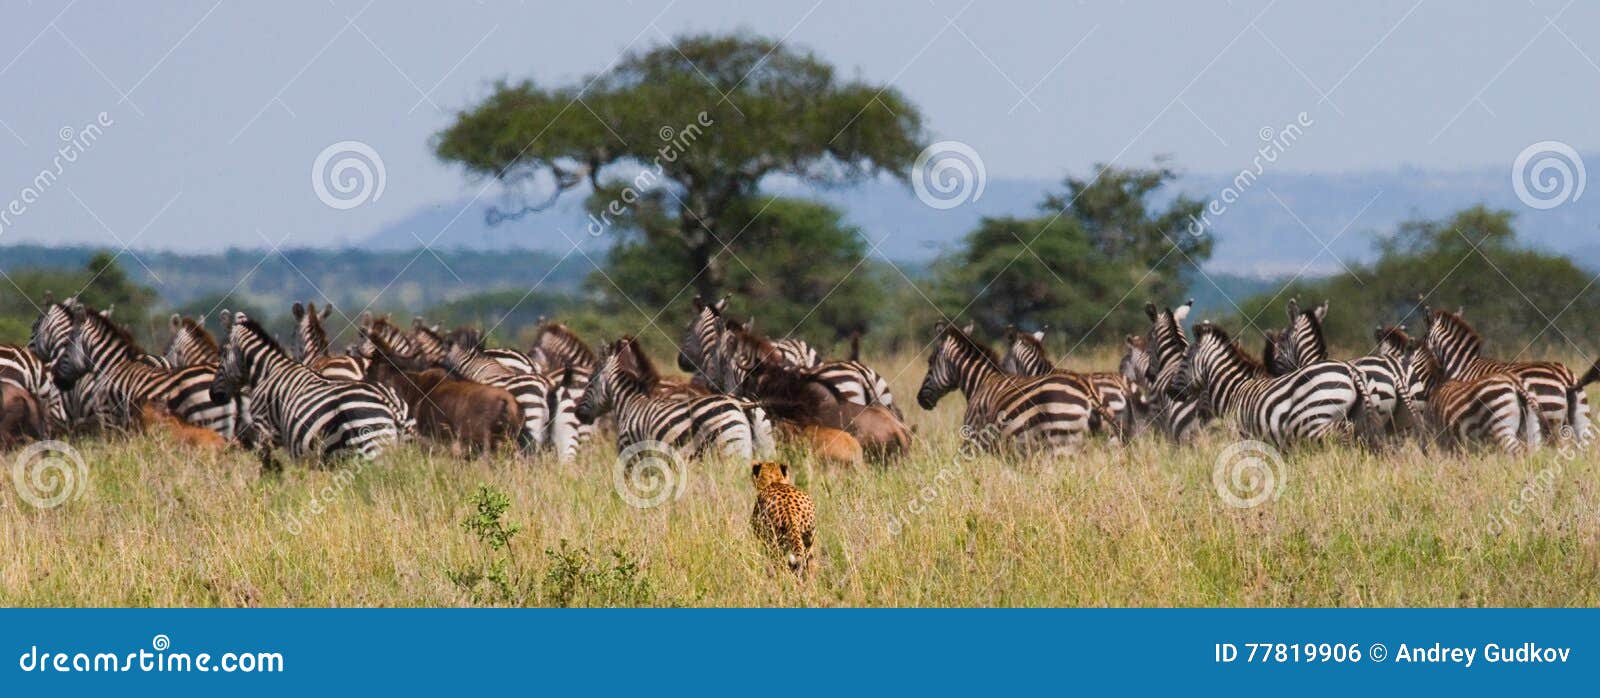 cheetah hunts for a herd of zebras and wildebeest. kenya. tanzania. africa. national park. serengeti. maasai mara.